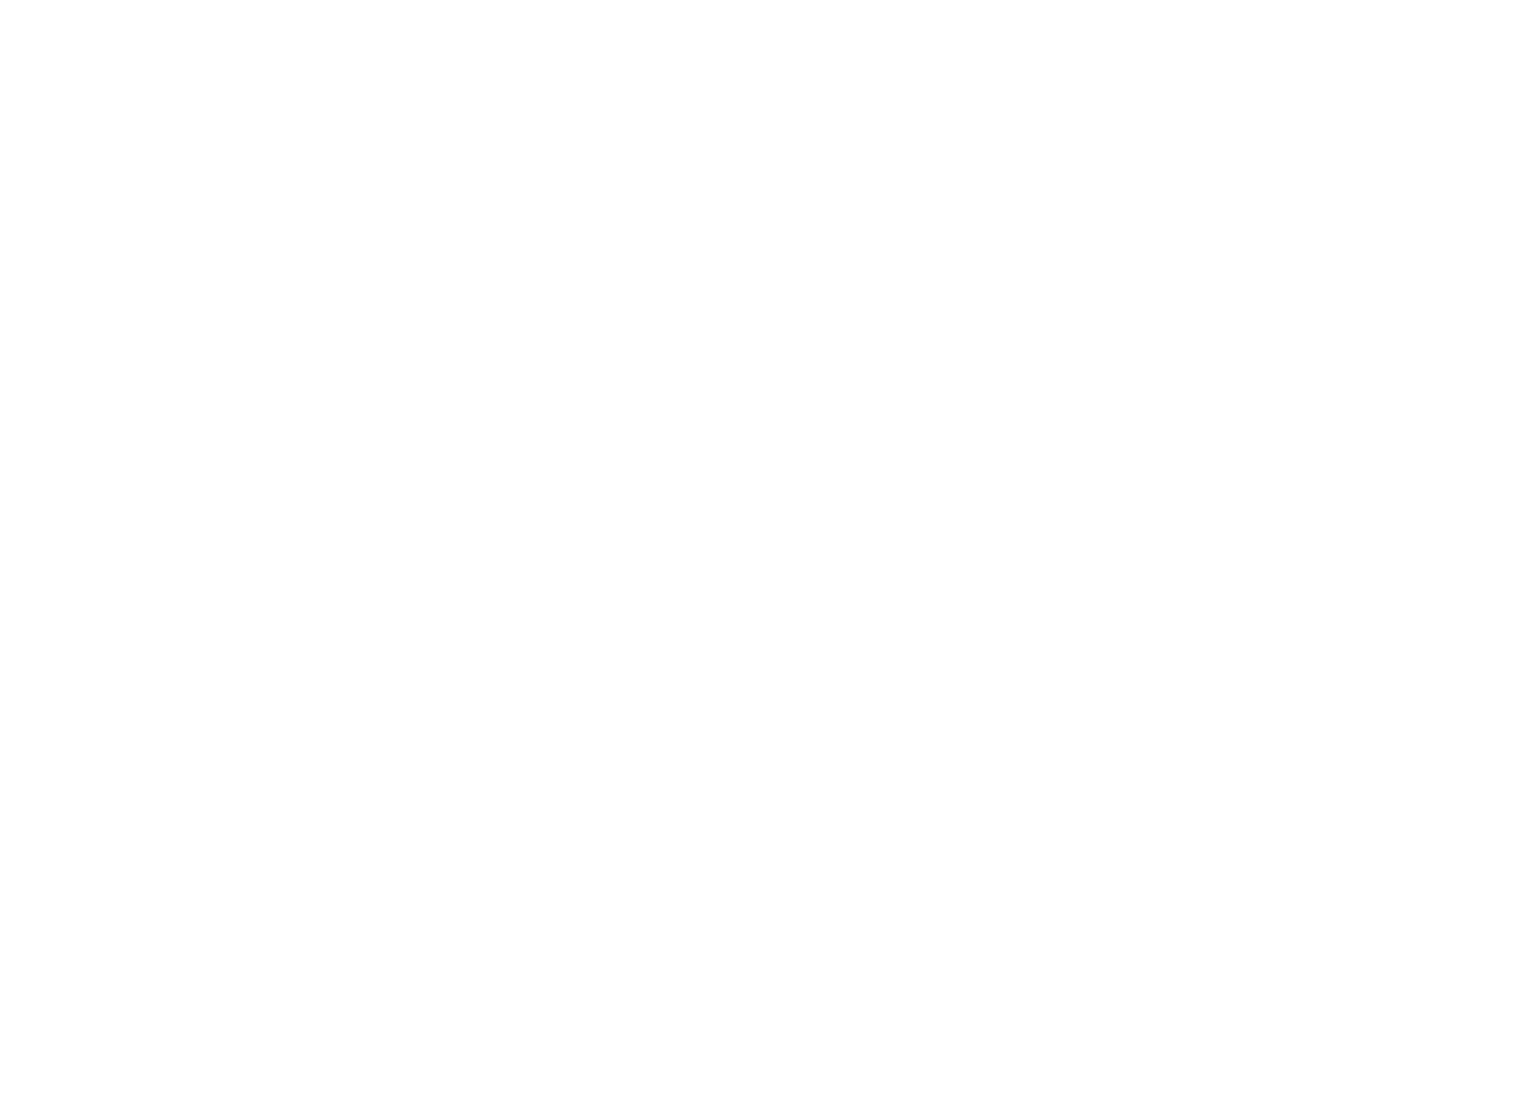 Lilium logo for dark backgrounds (transparent PNG)